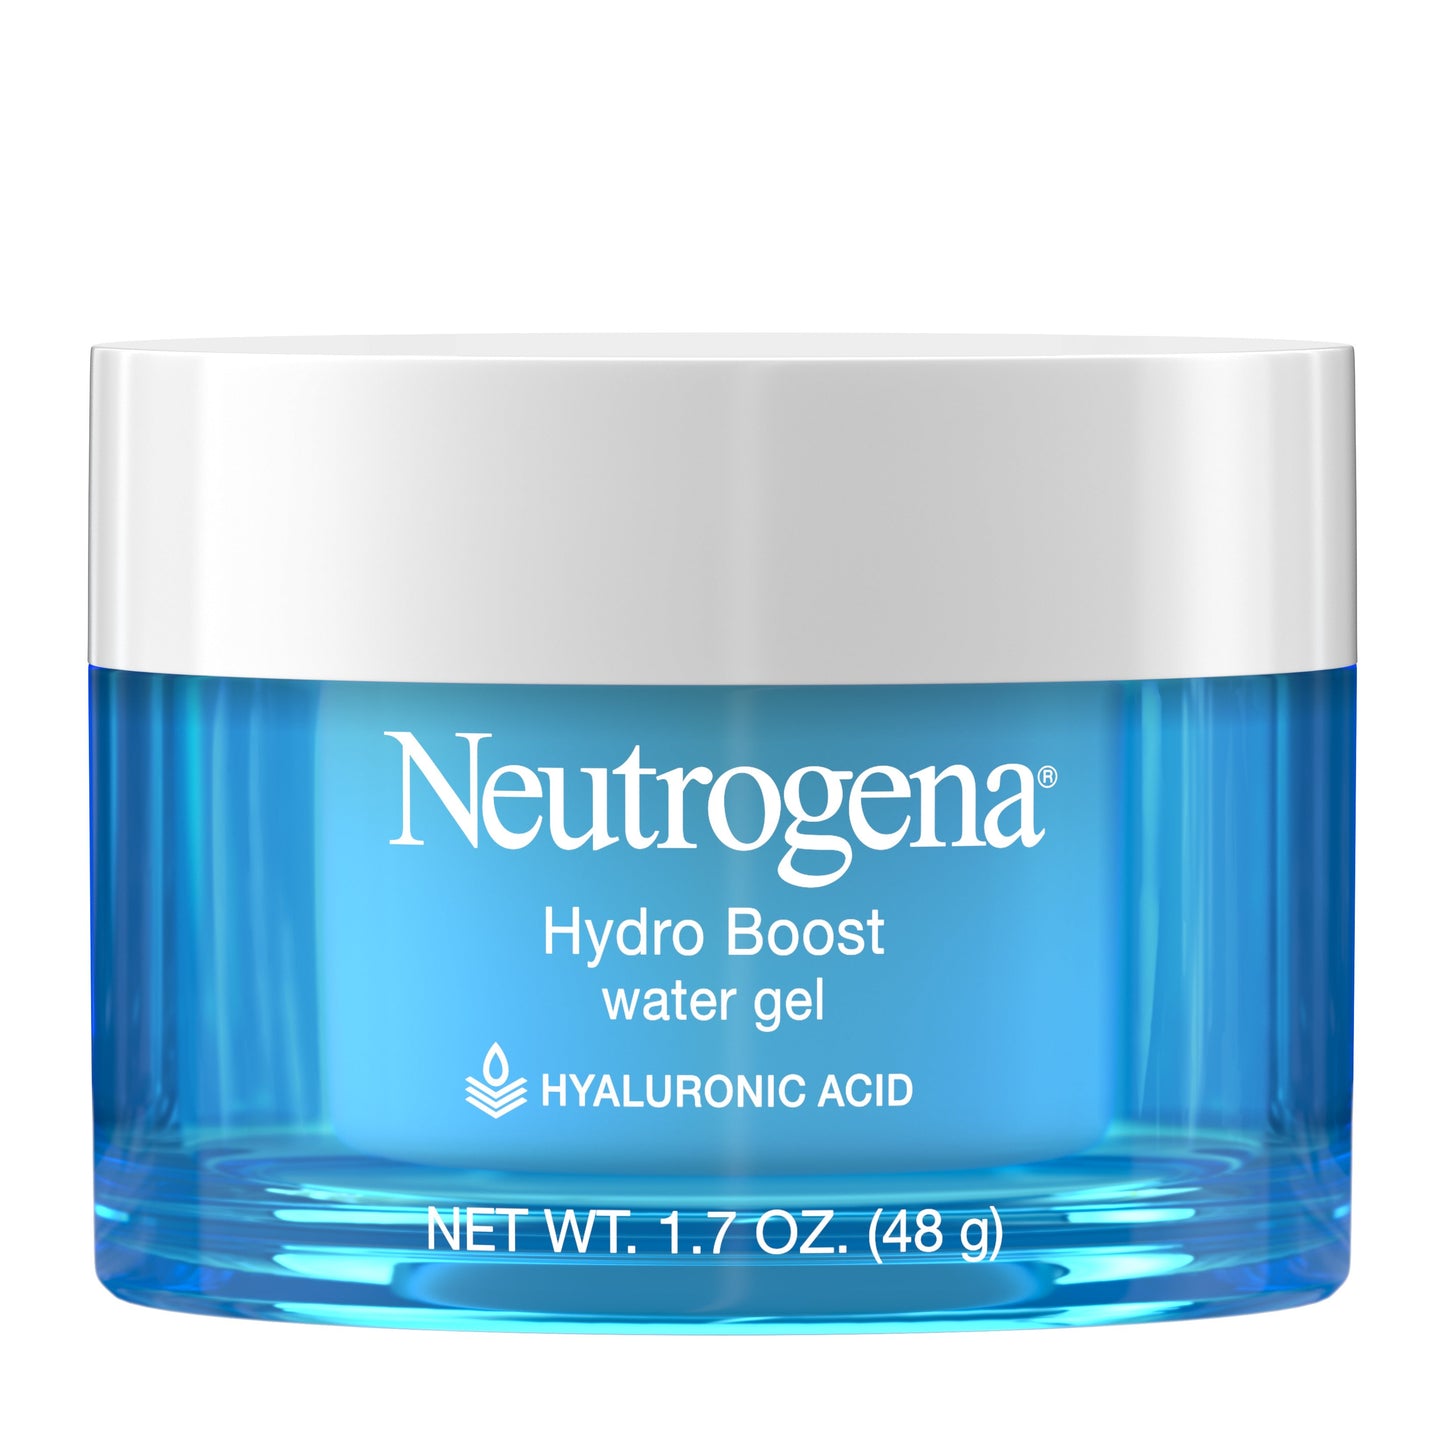 Neutrogena Hydro Boost Hyaluronic Acid Hydrating Water Face Gel Moisturizer For Dry Skin, 1.7 Fl Oz